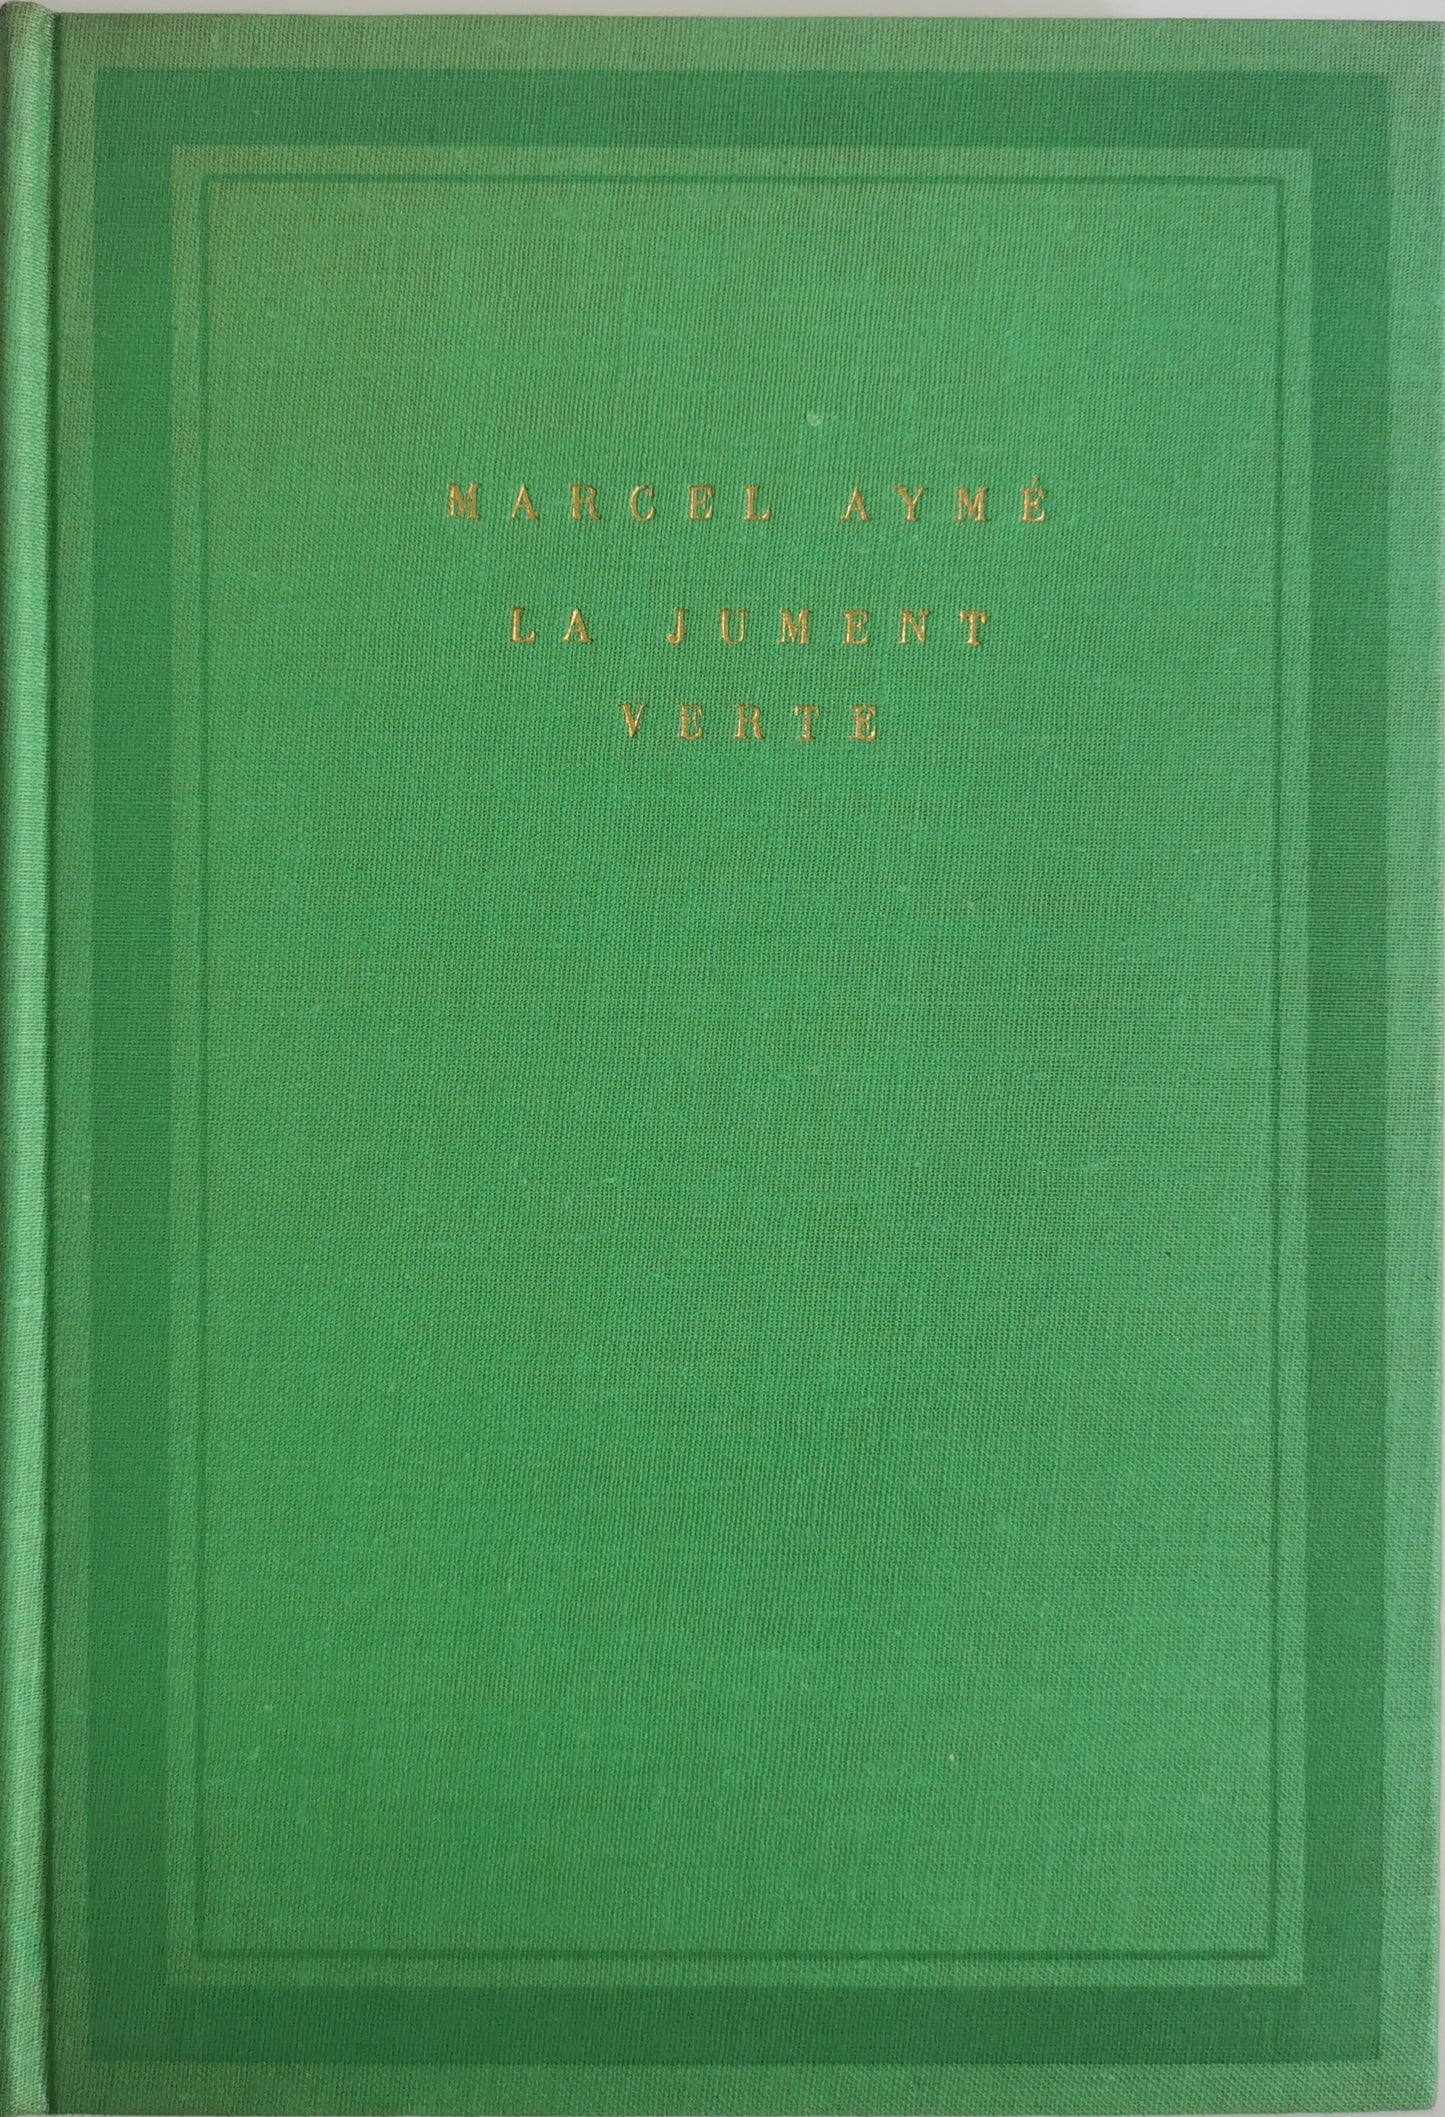 La jument verte, Marcel Aymé, Collection Soleil, Gallimard, 1933.